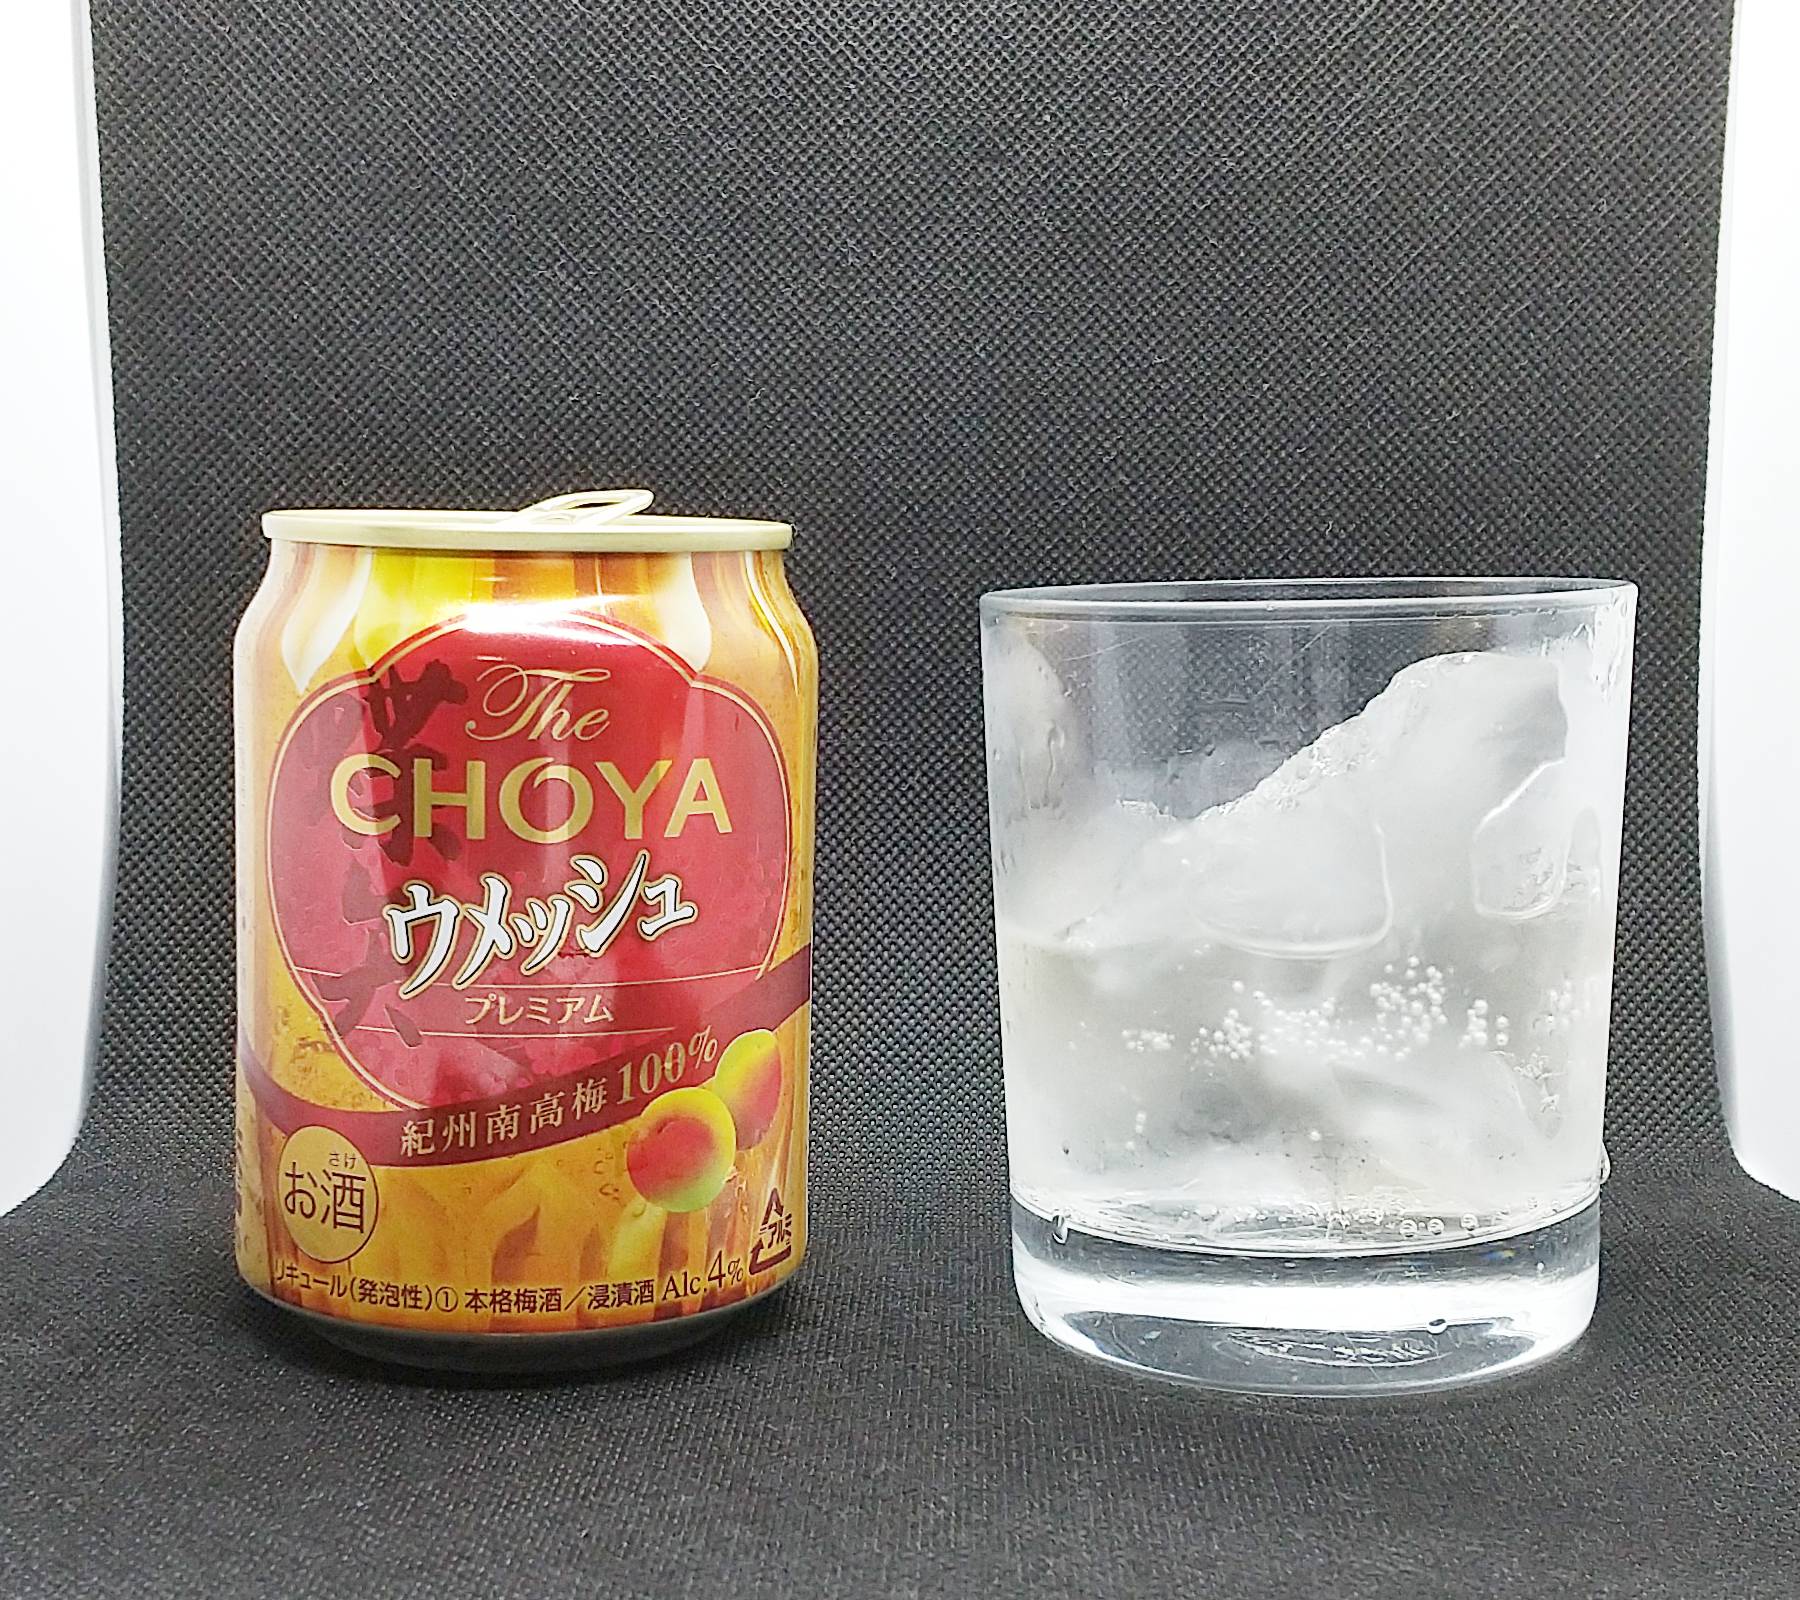 The CHOYA ウメッシュ